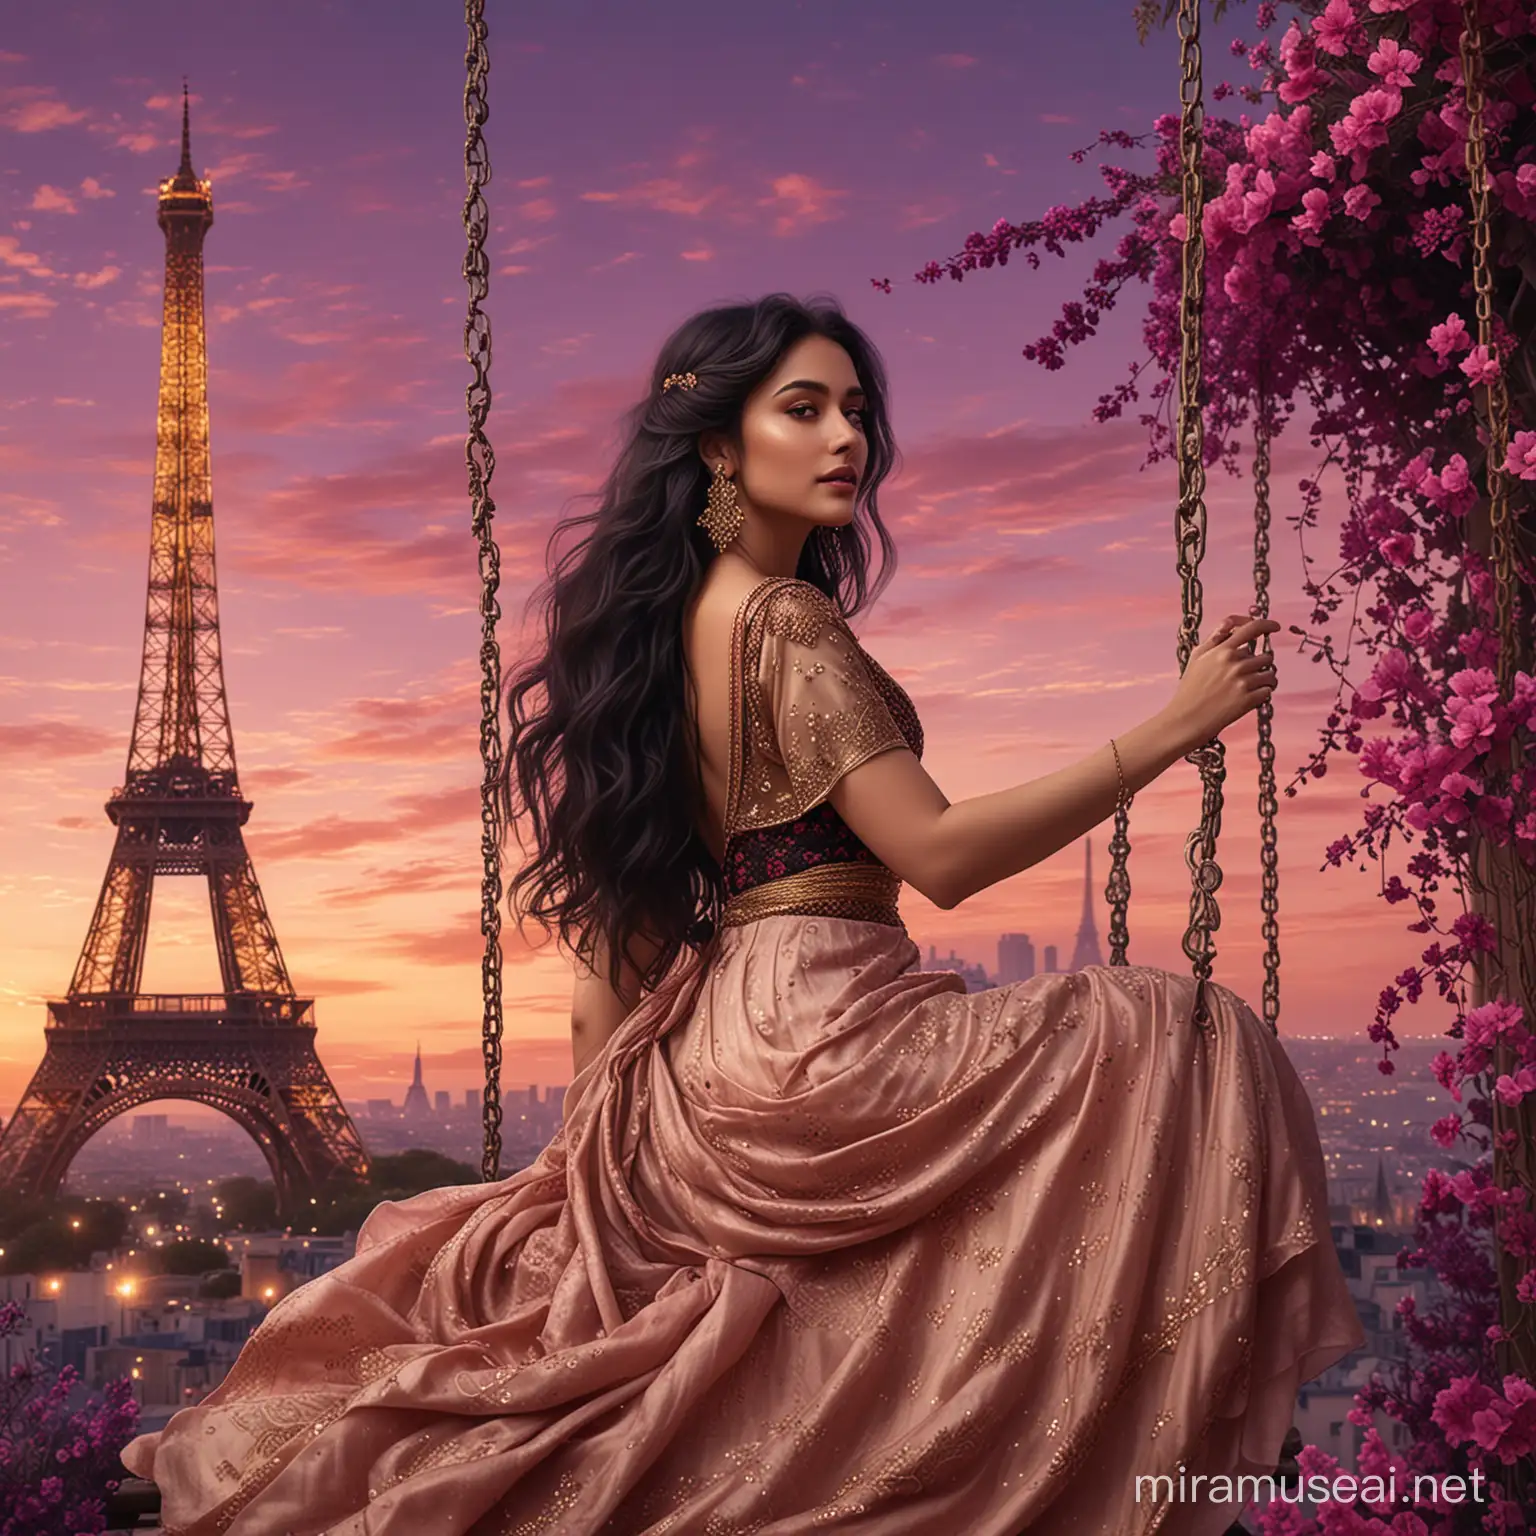 Elegant Woman on Swing in Twilight Garden with Golden Eiffel Tower Background